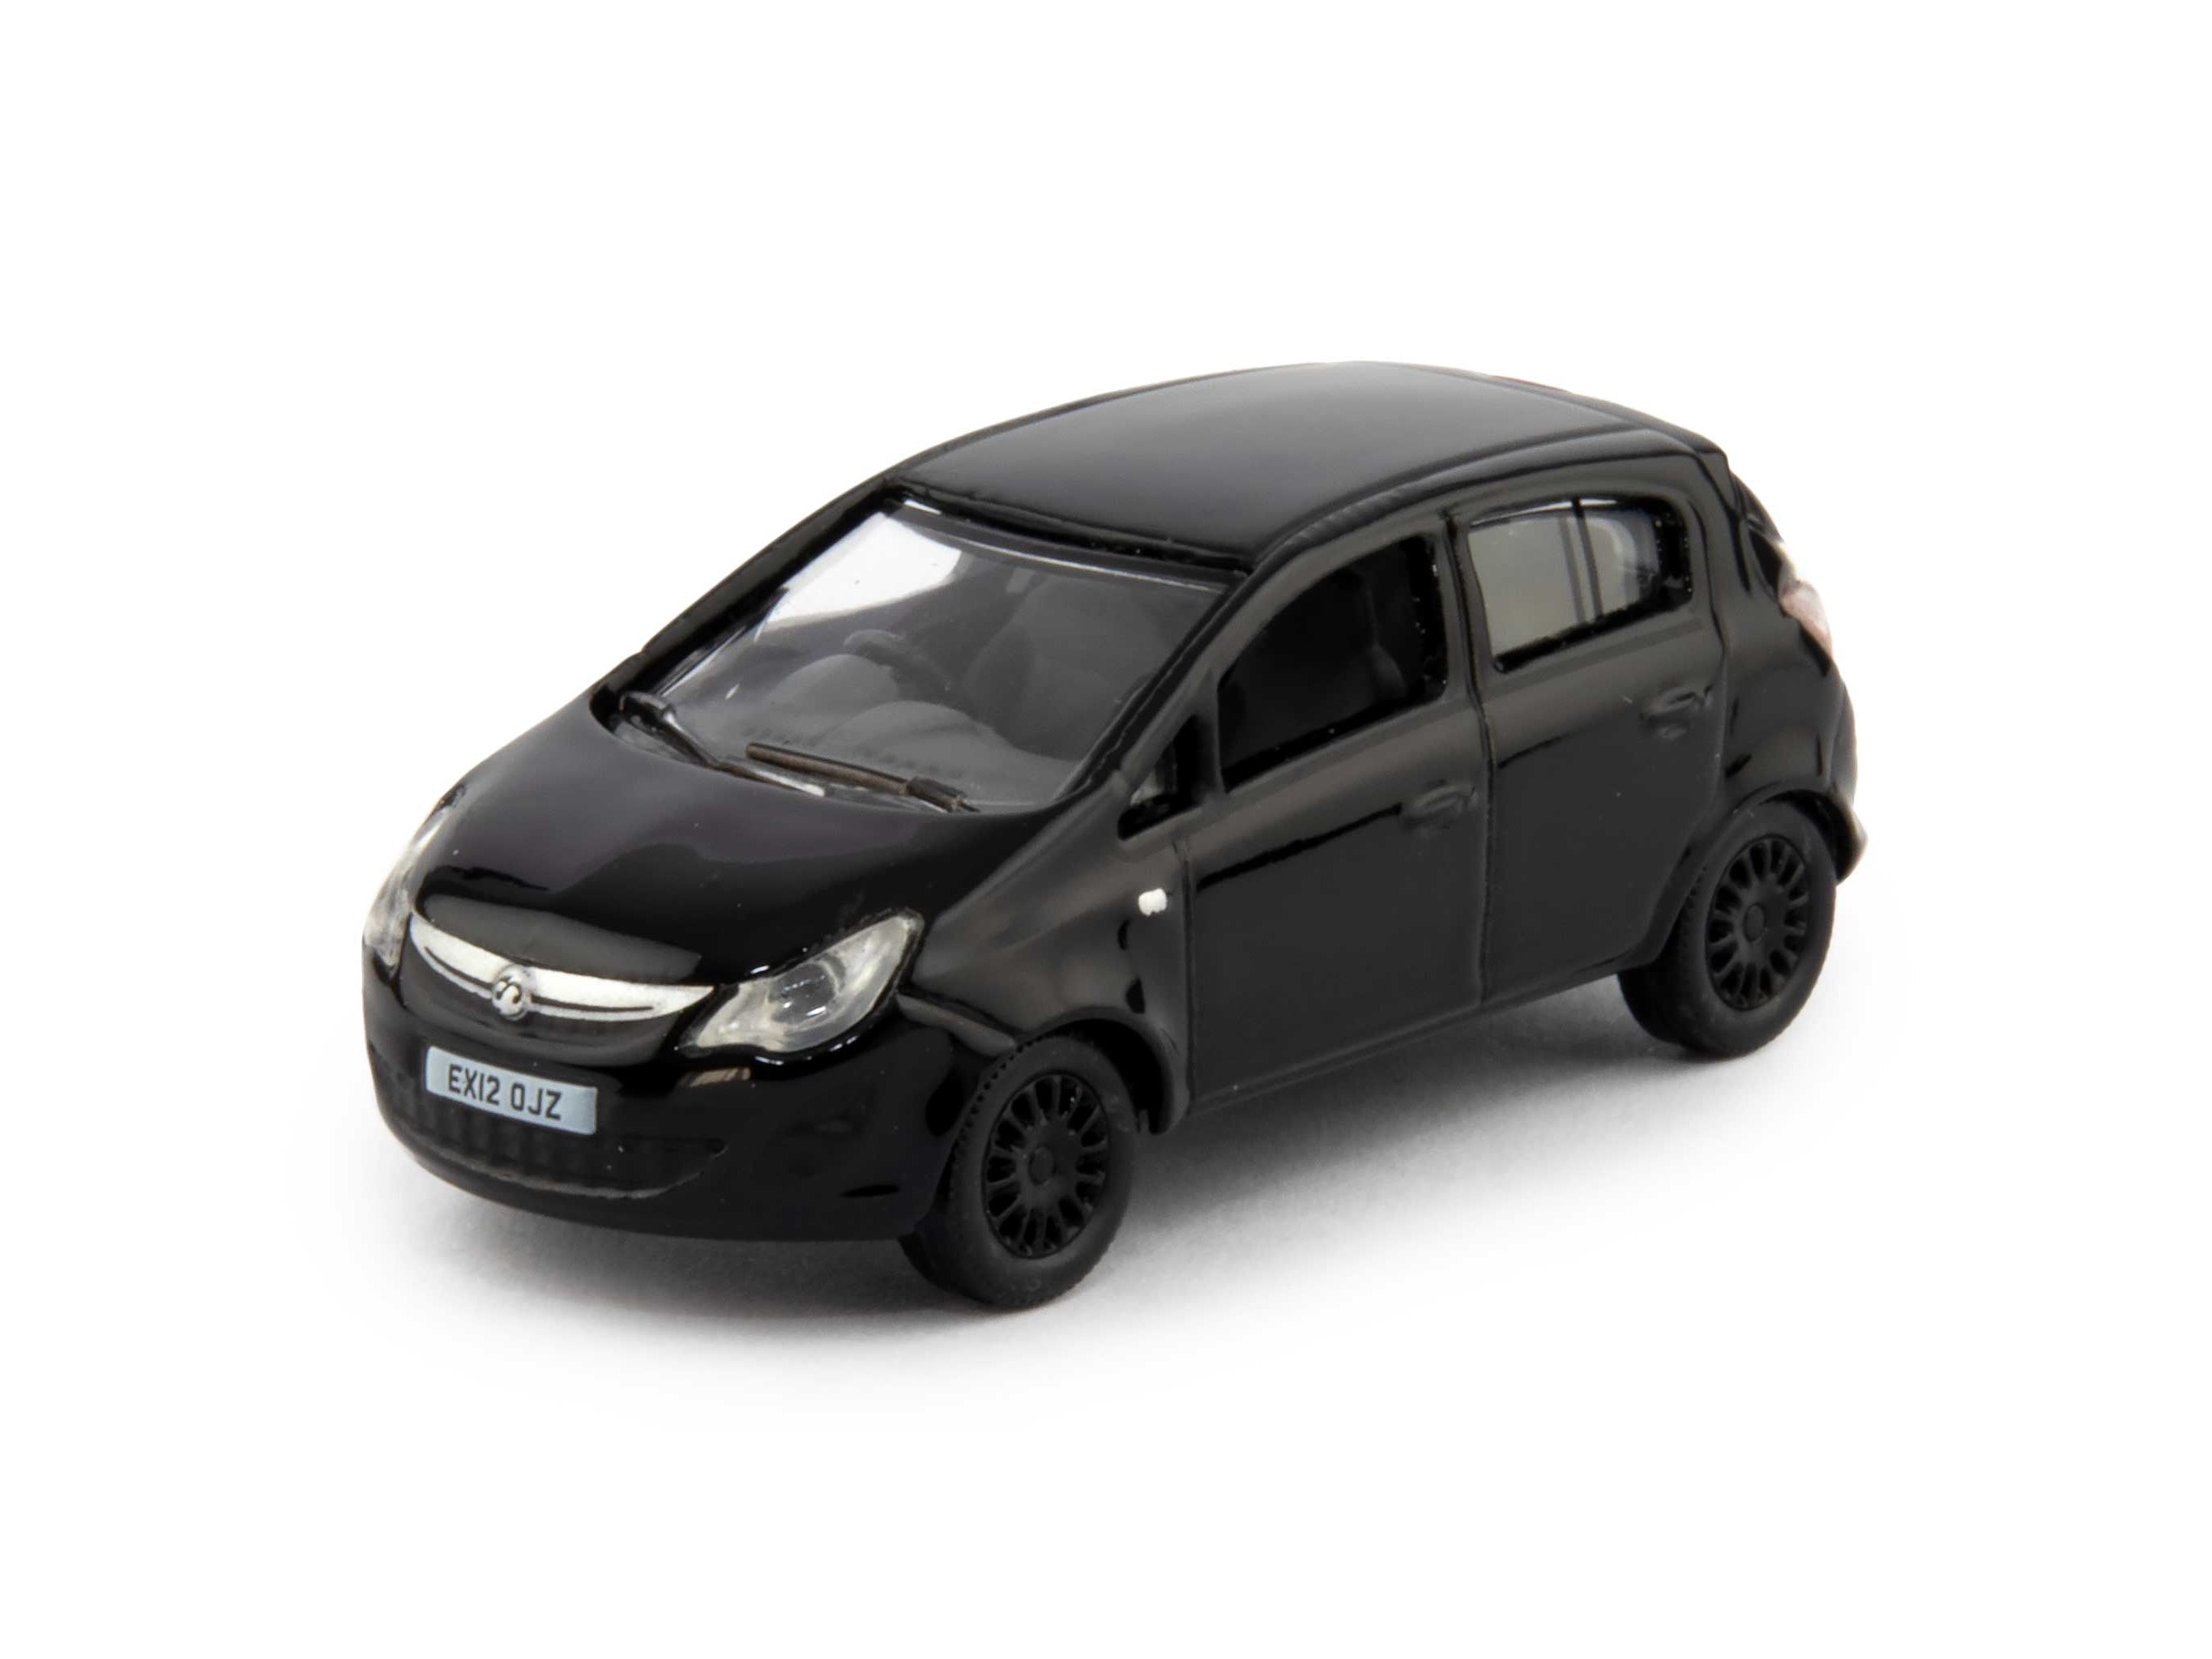 Vauxhall Corsa Diecast Model Car black - 1:76 Scale